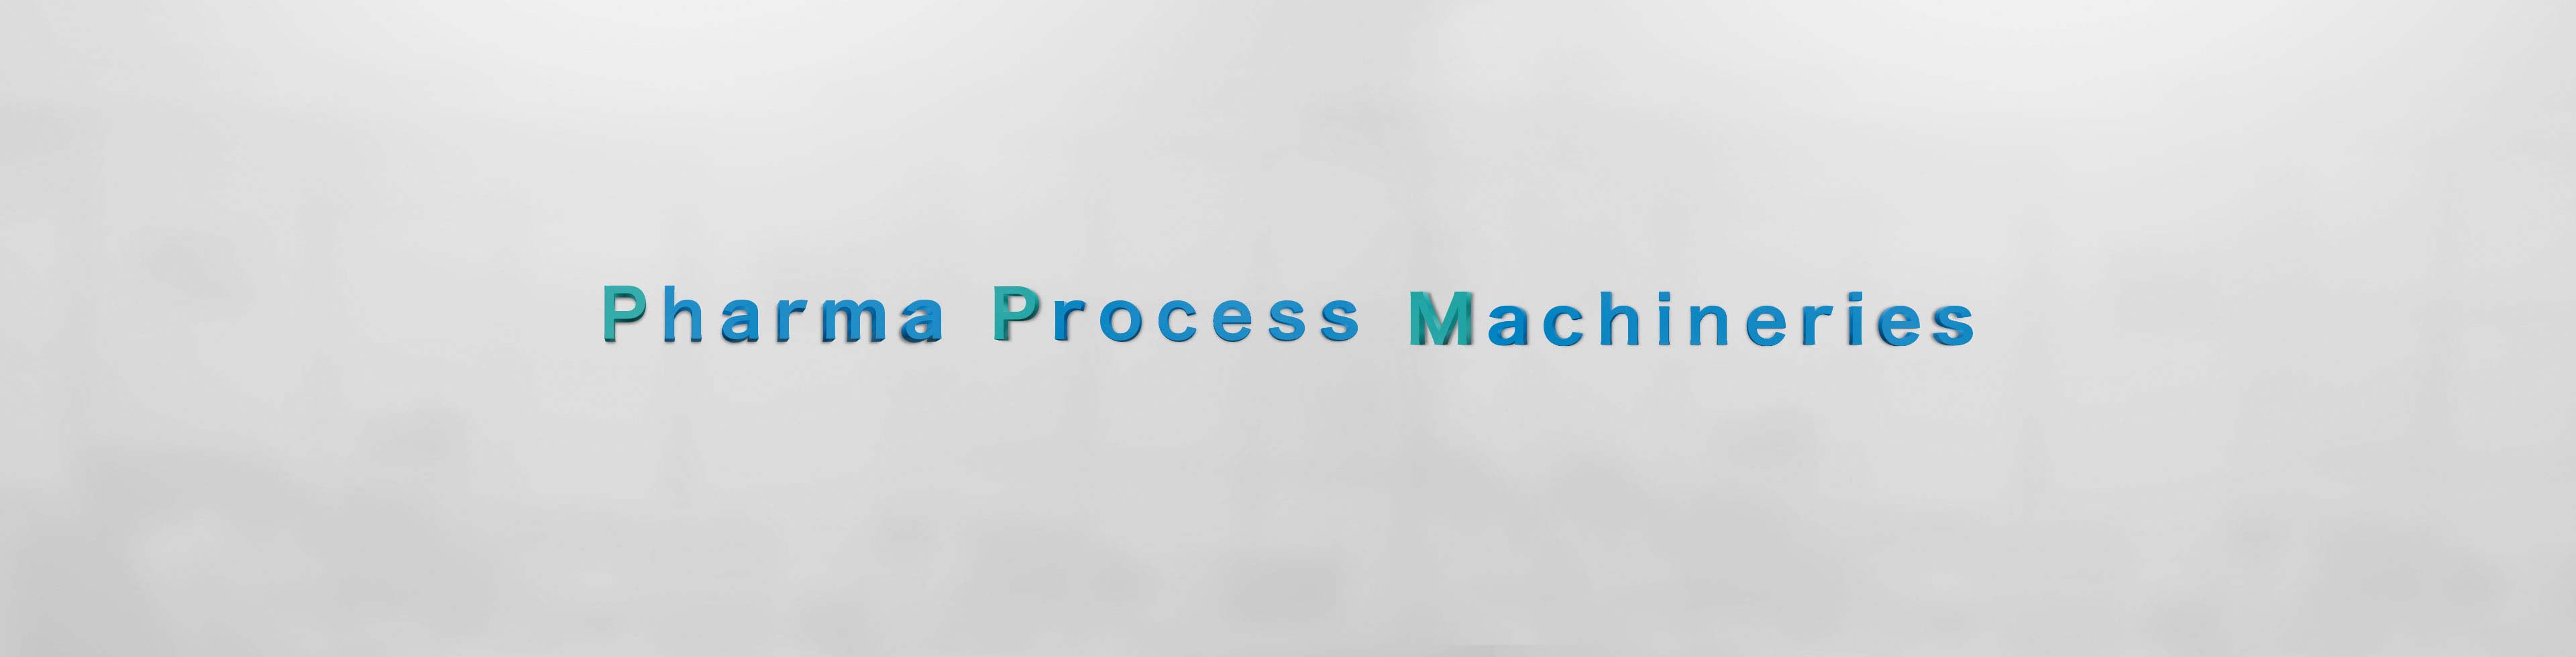 pharma process machineries 